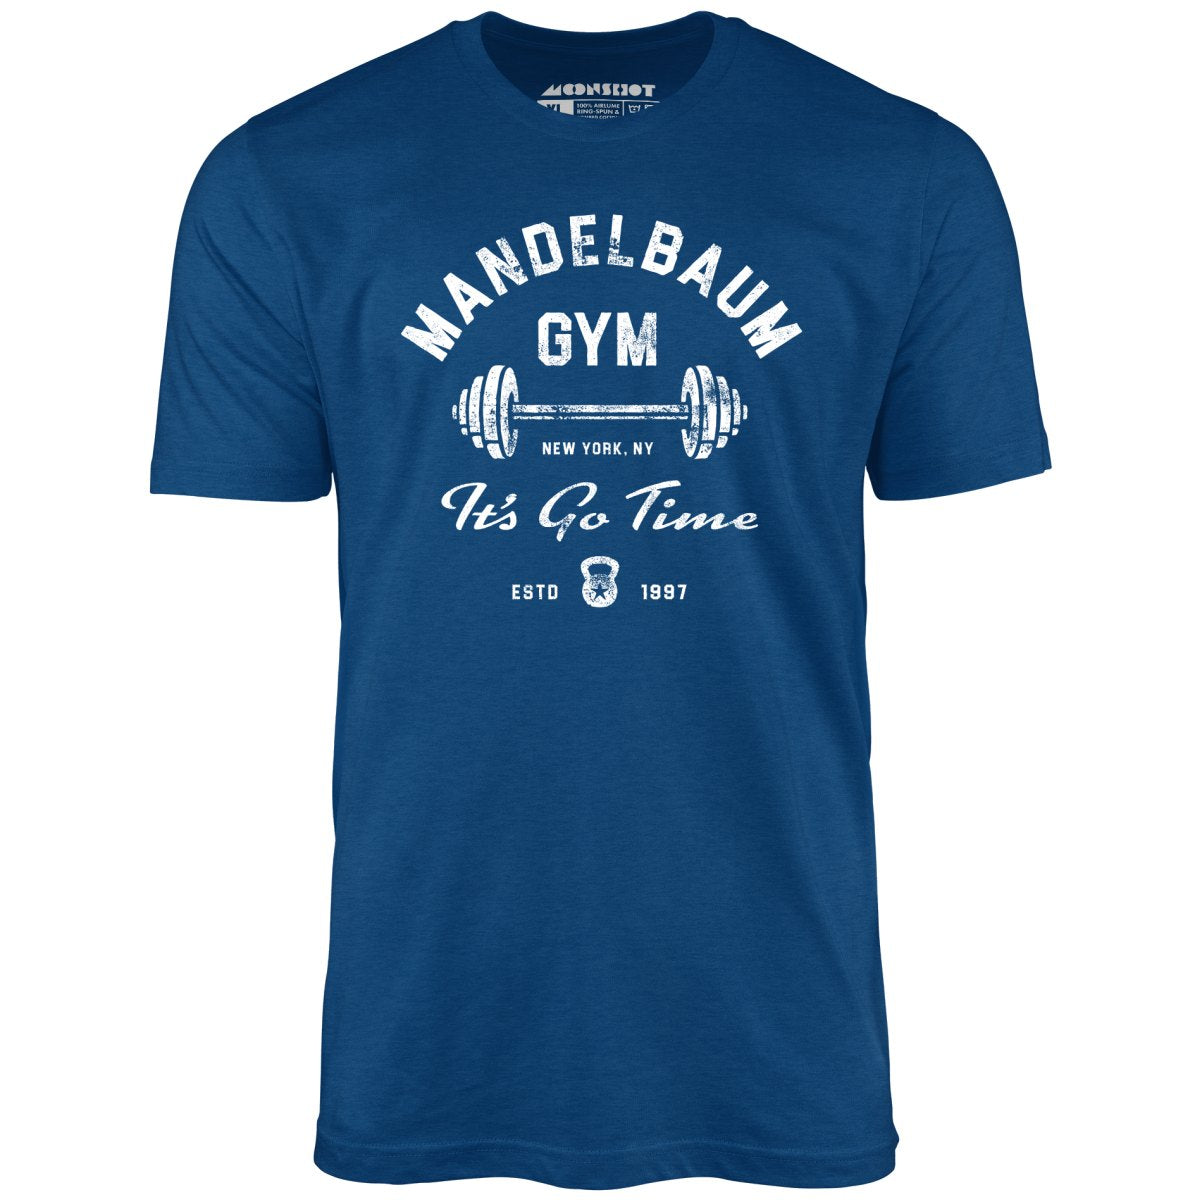 Mandelbaum Gym - Unisex T-Shirt